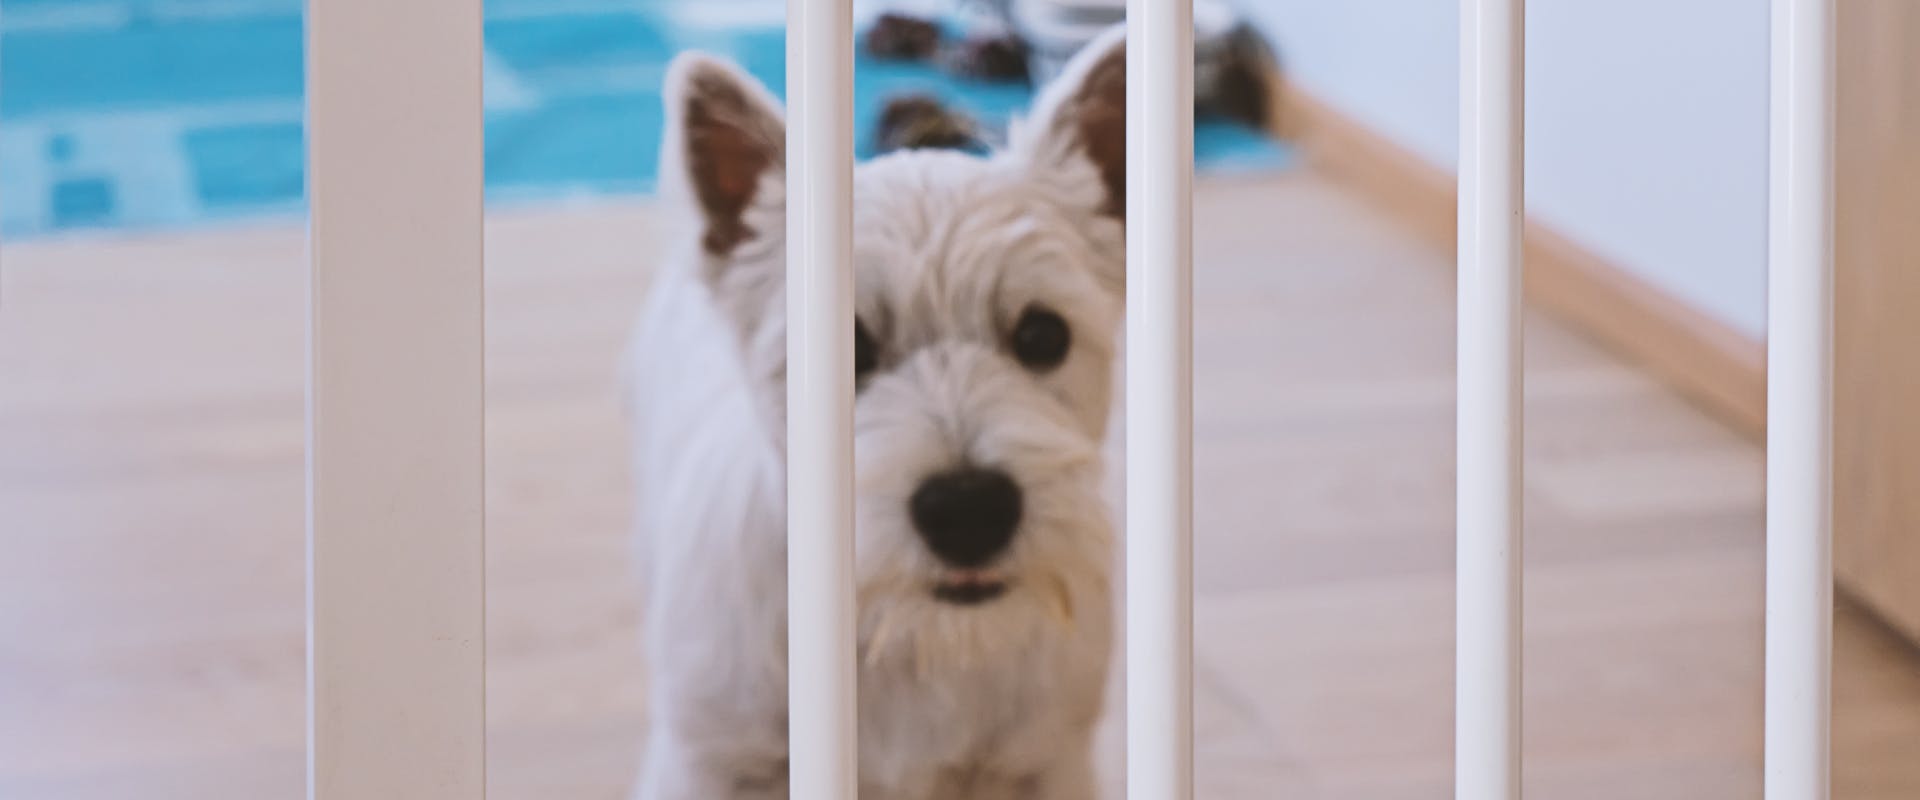 A dog behind a dog gate.